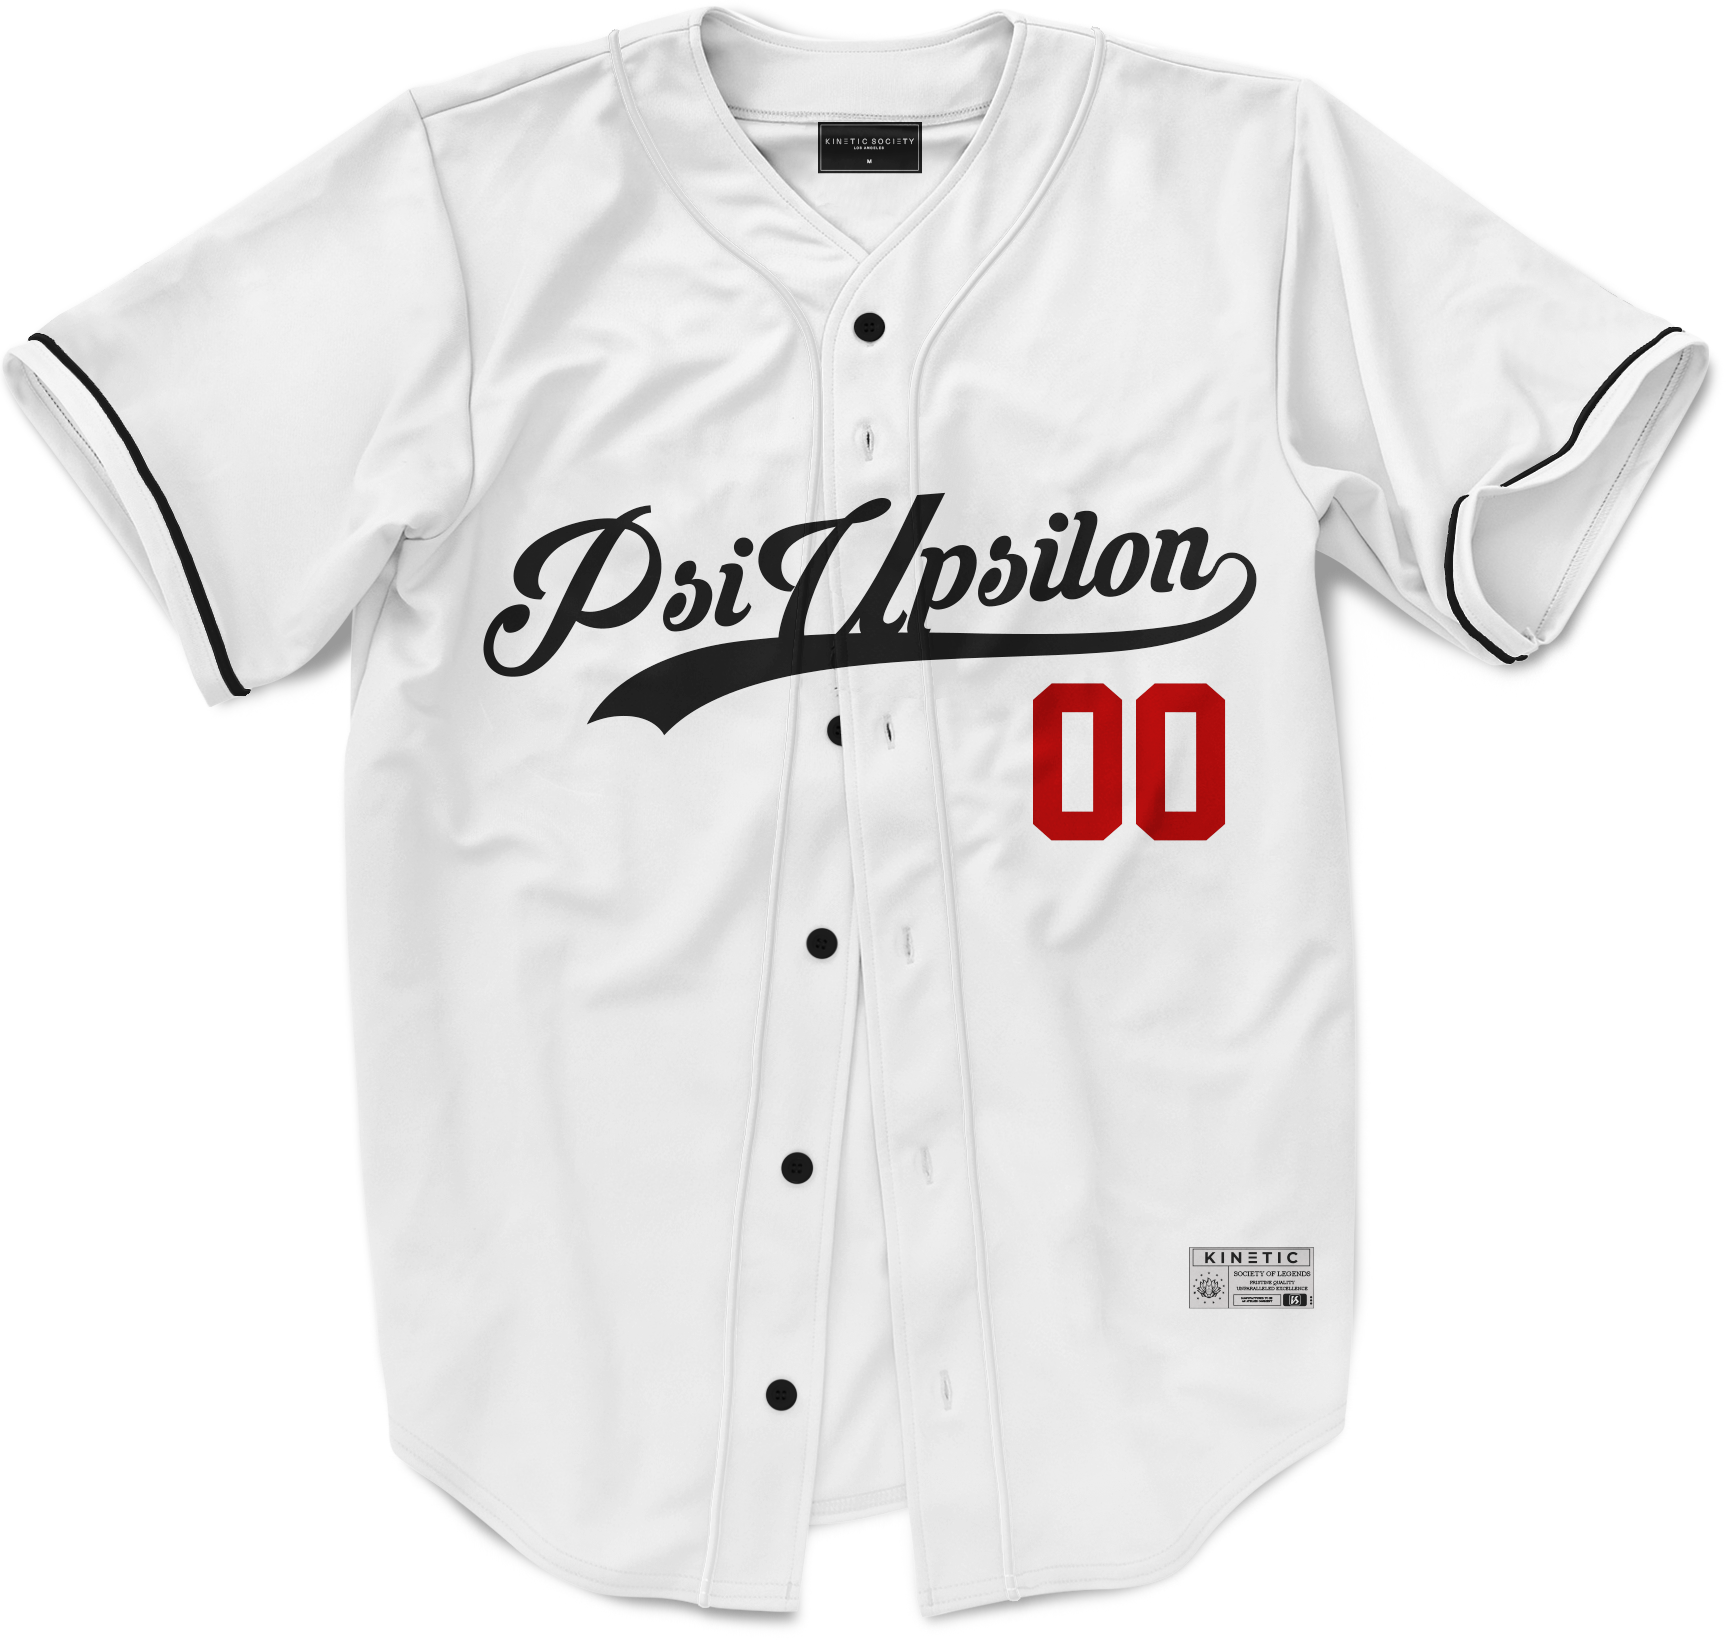 Psi Upsilon - Classic Ballpark Red Baseball Jersey